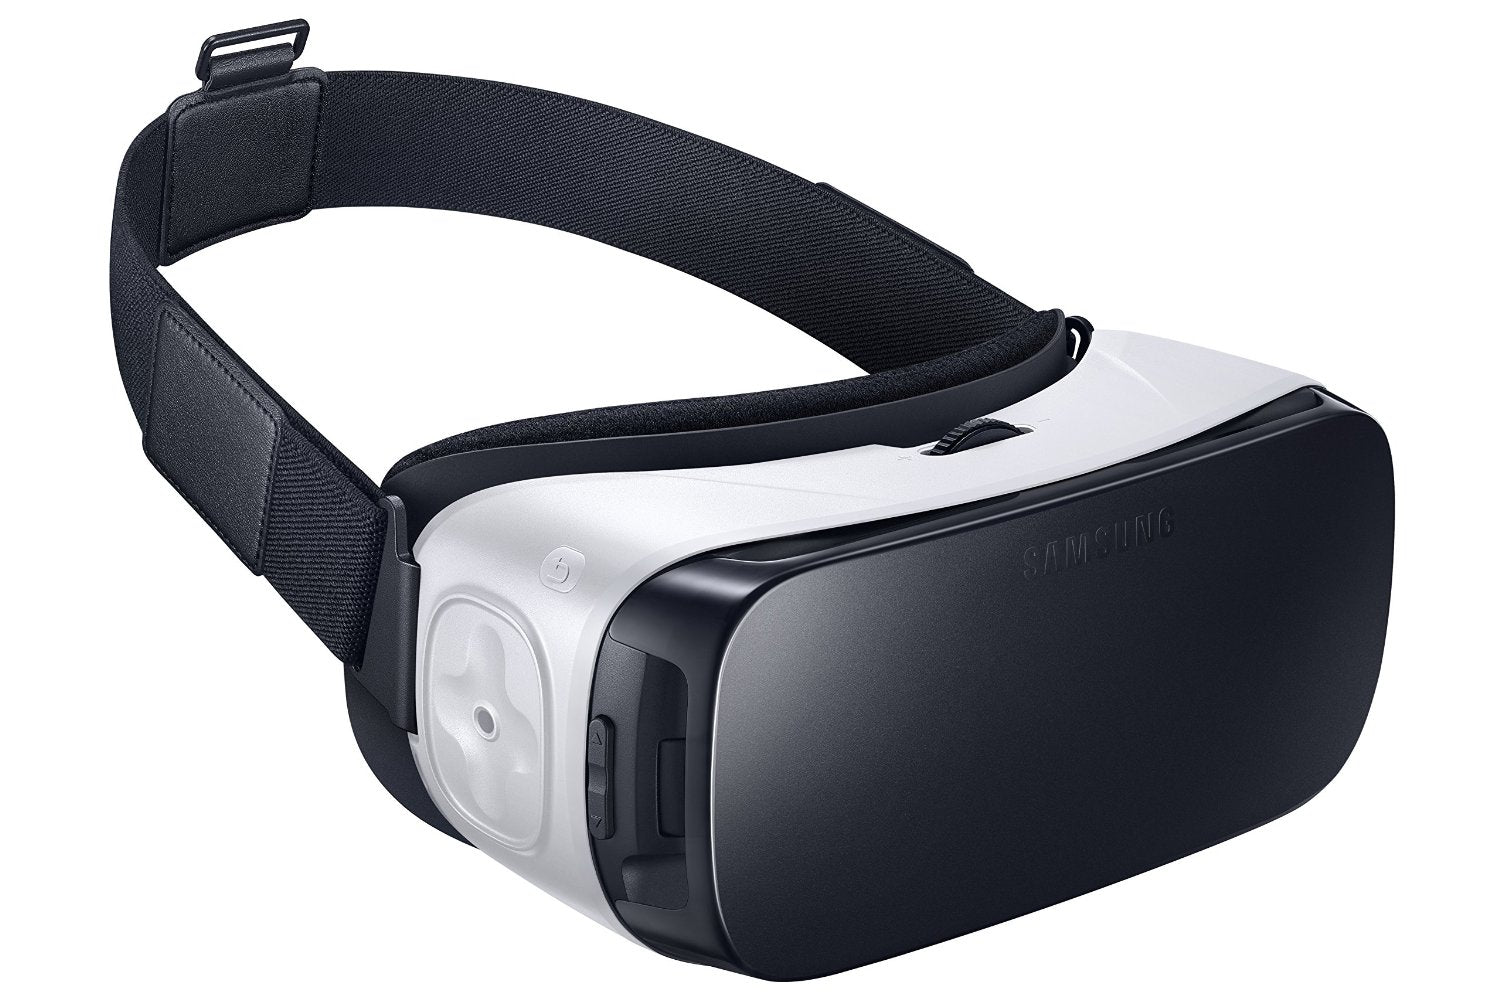 Gear Virtual Reality 3D